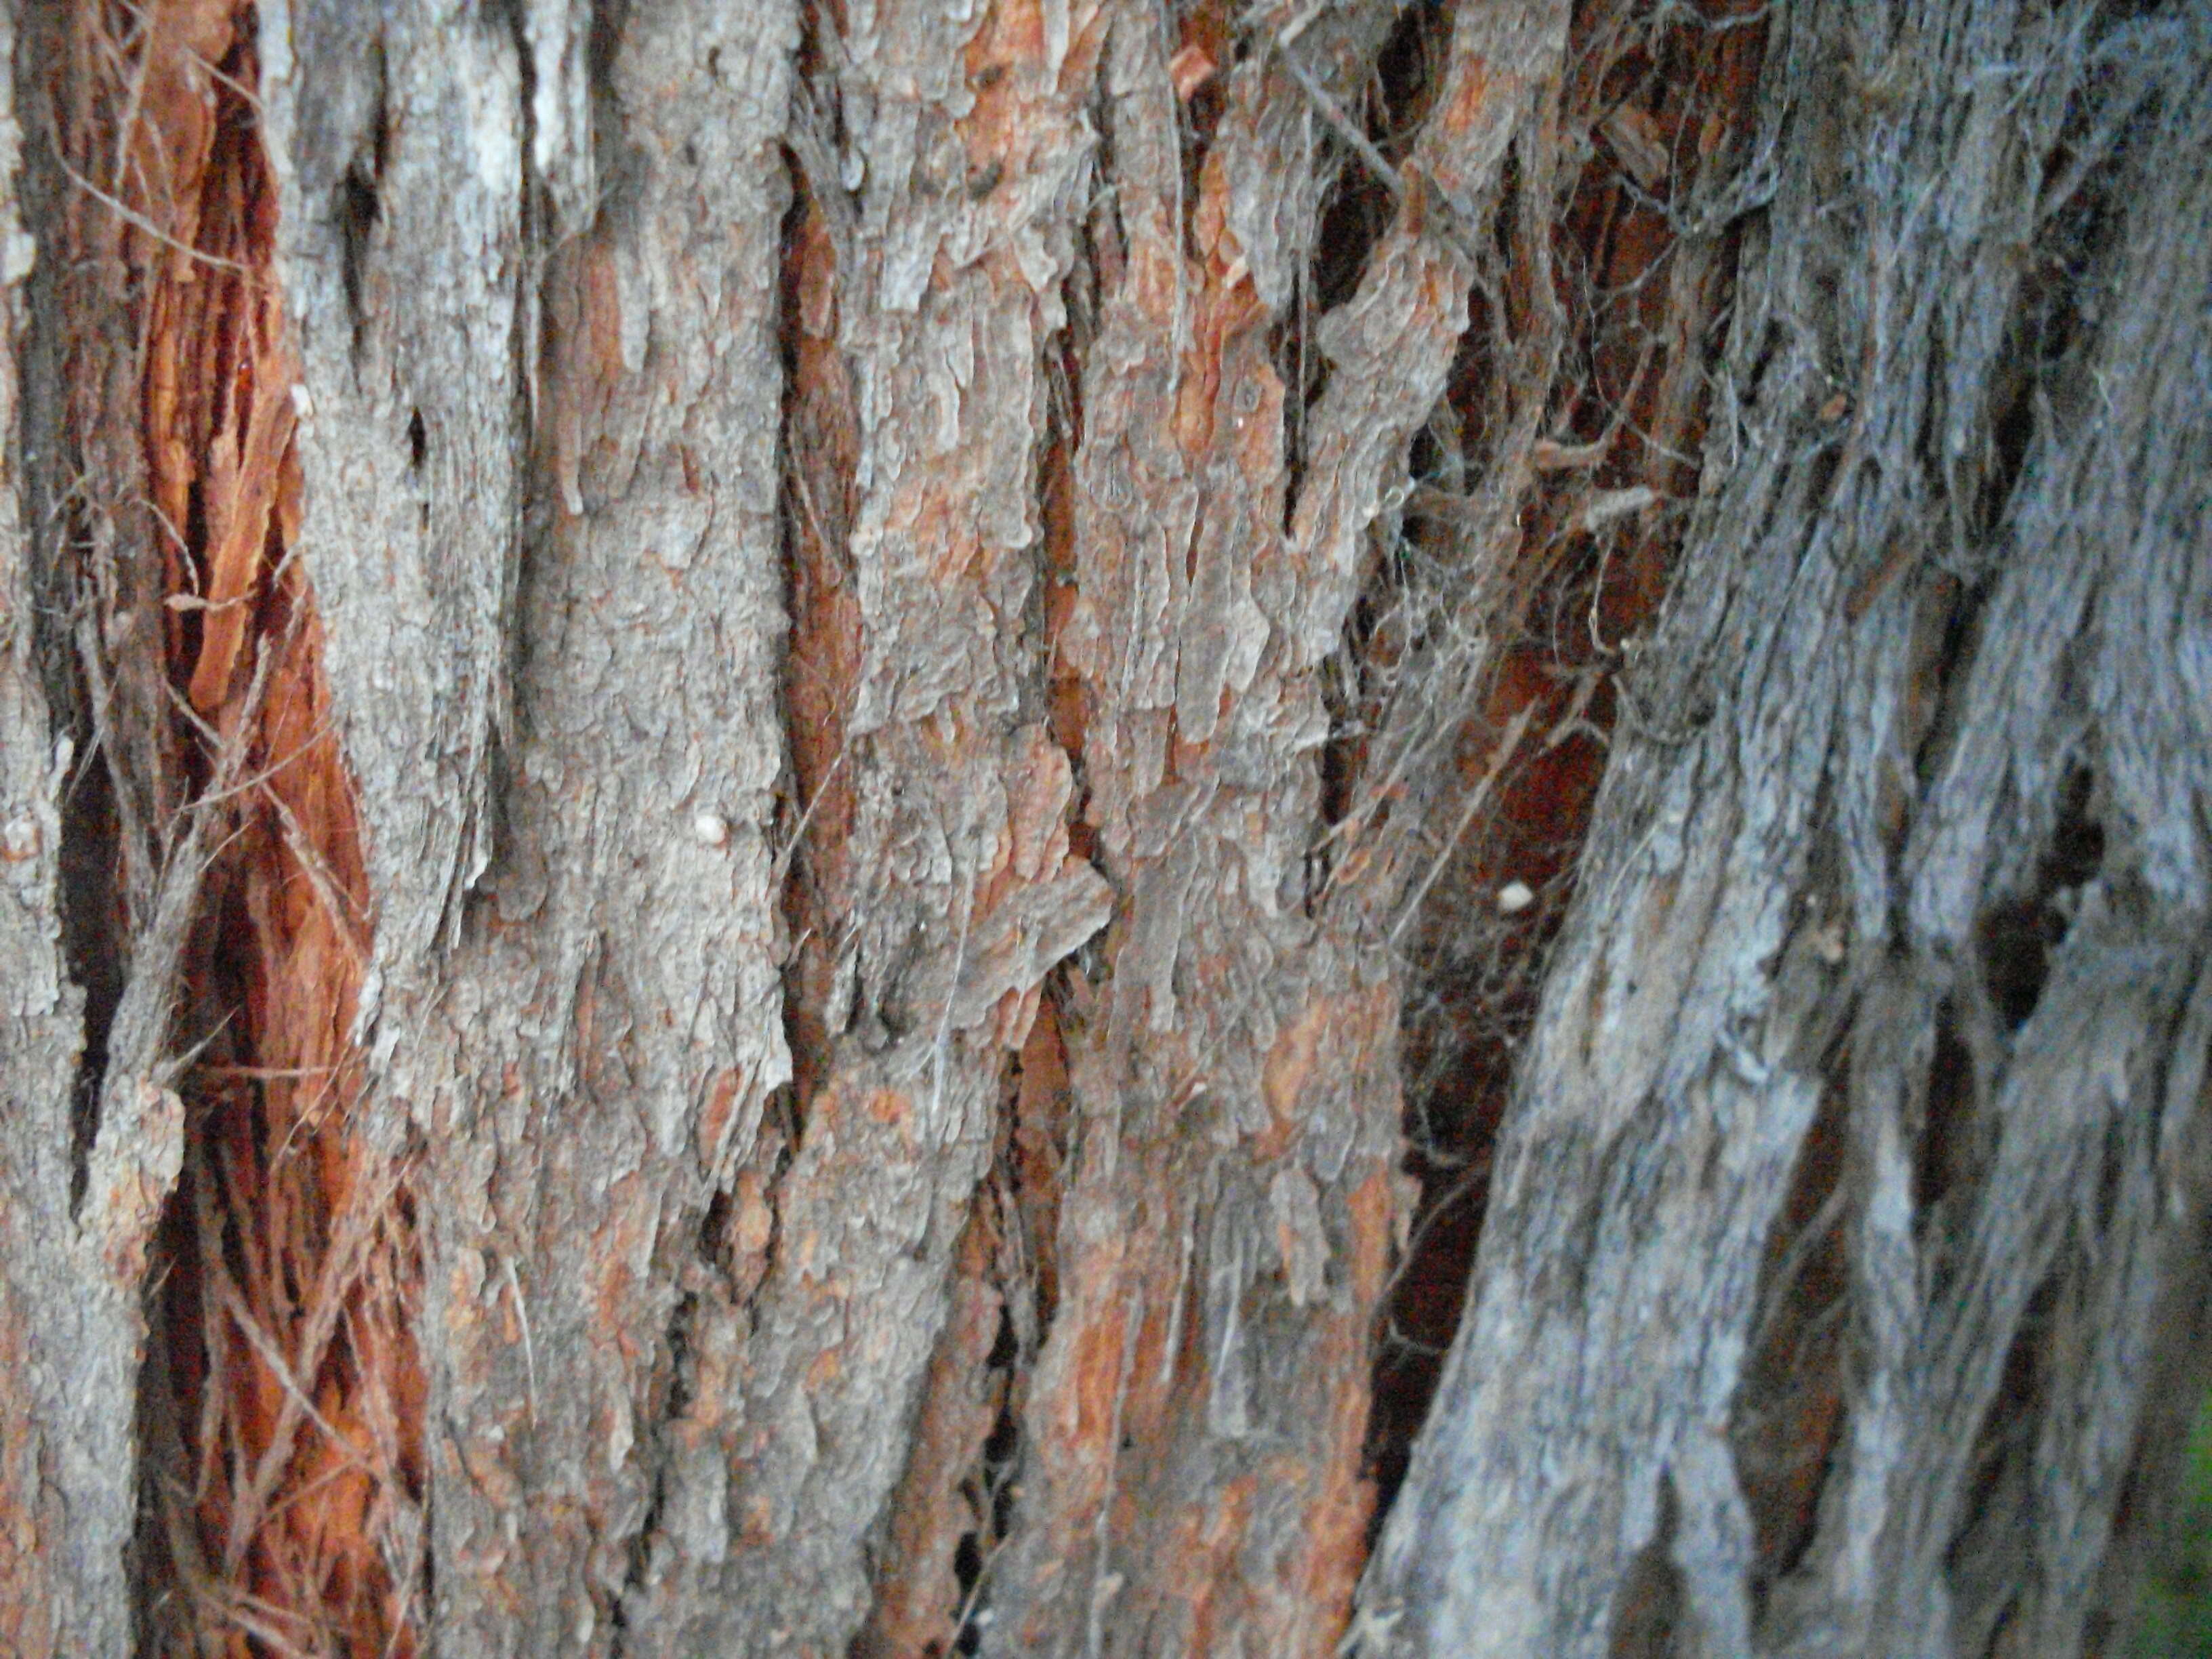 Image of turpentine tree